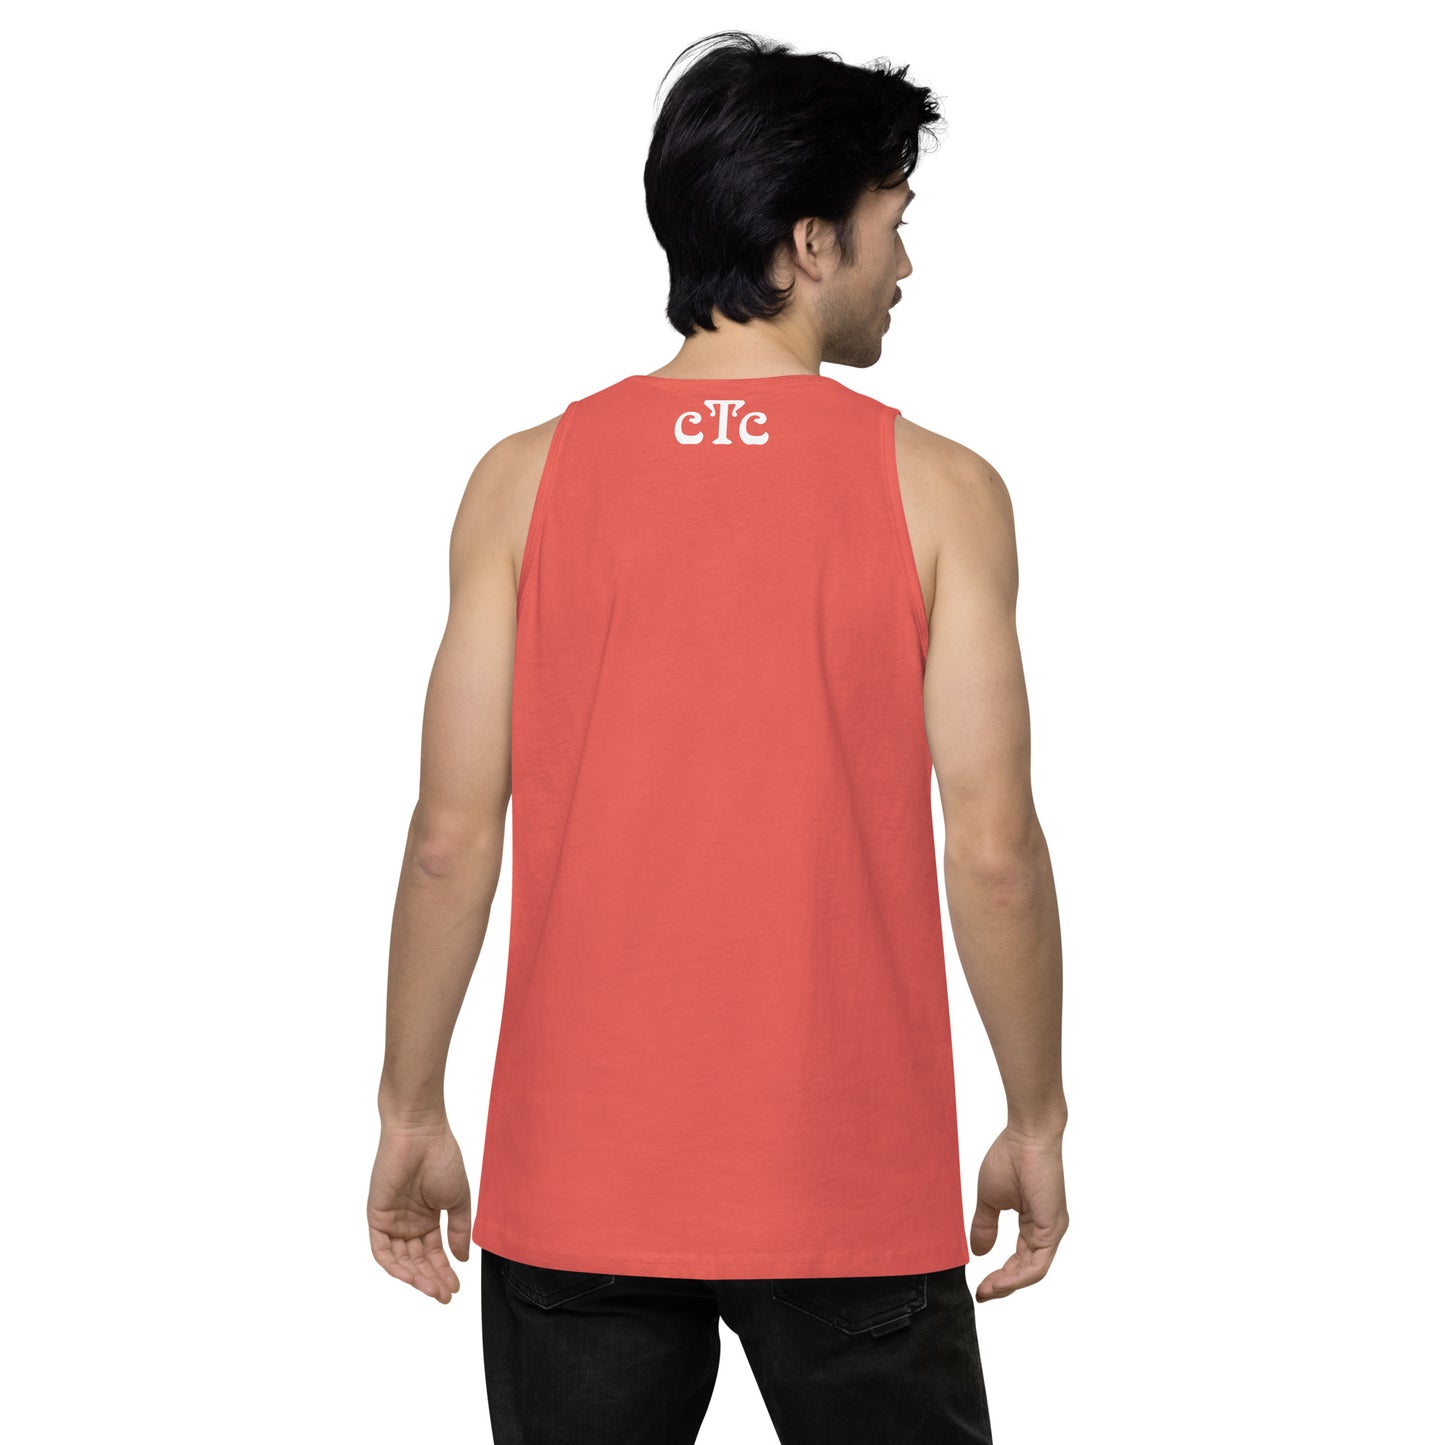 CtC Heart Logo premium tank top